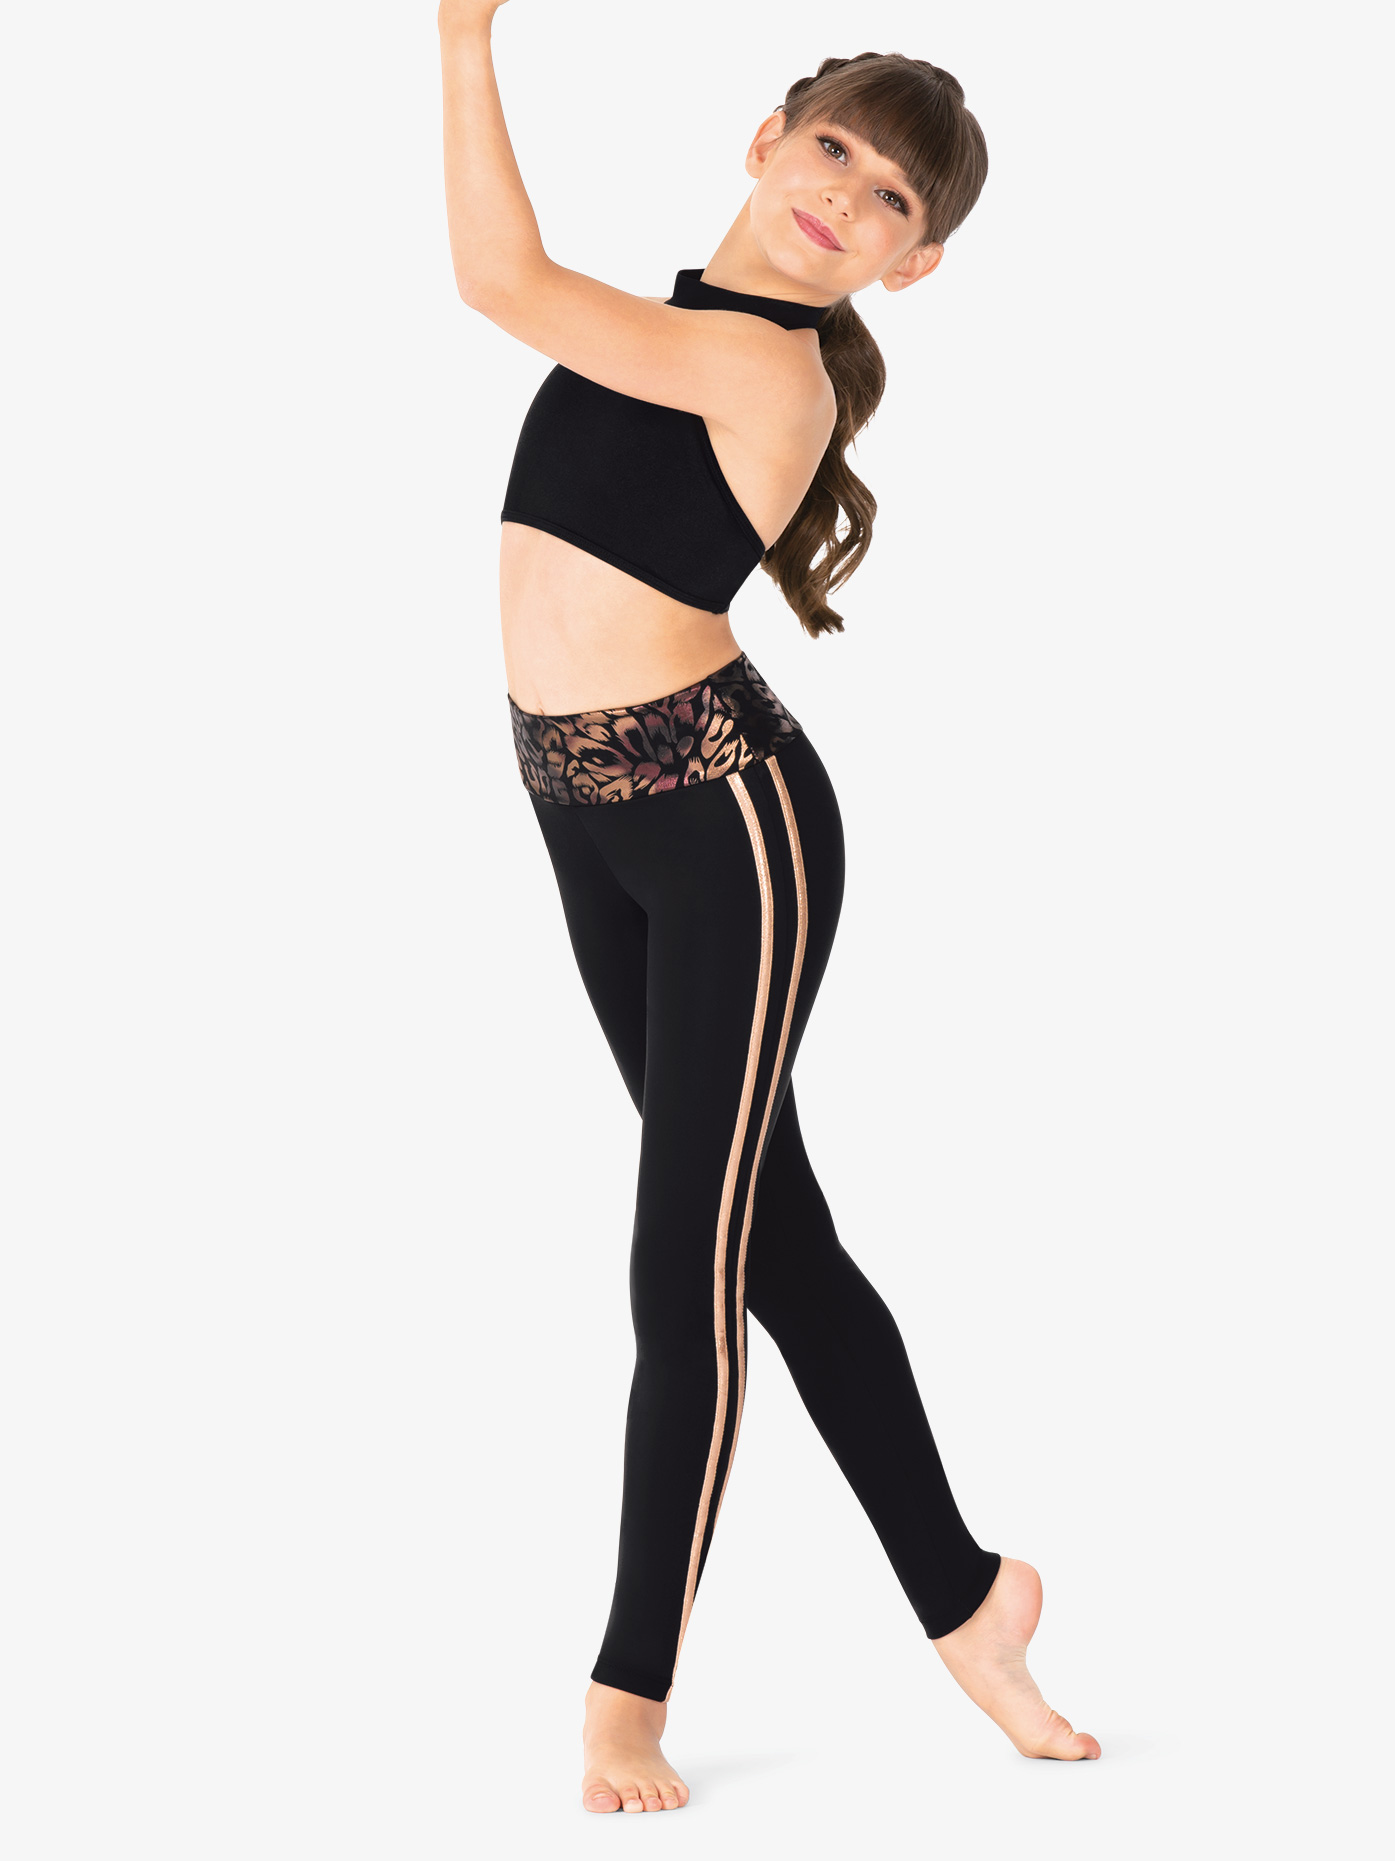 Daydance Girl's Stirrup Pants for Gymnastics Shiny Spandex